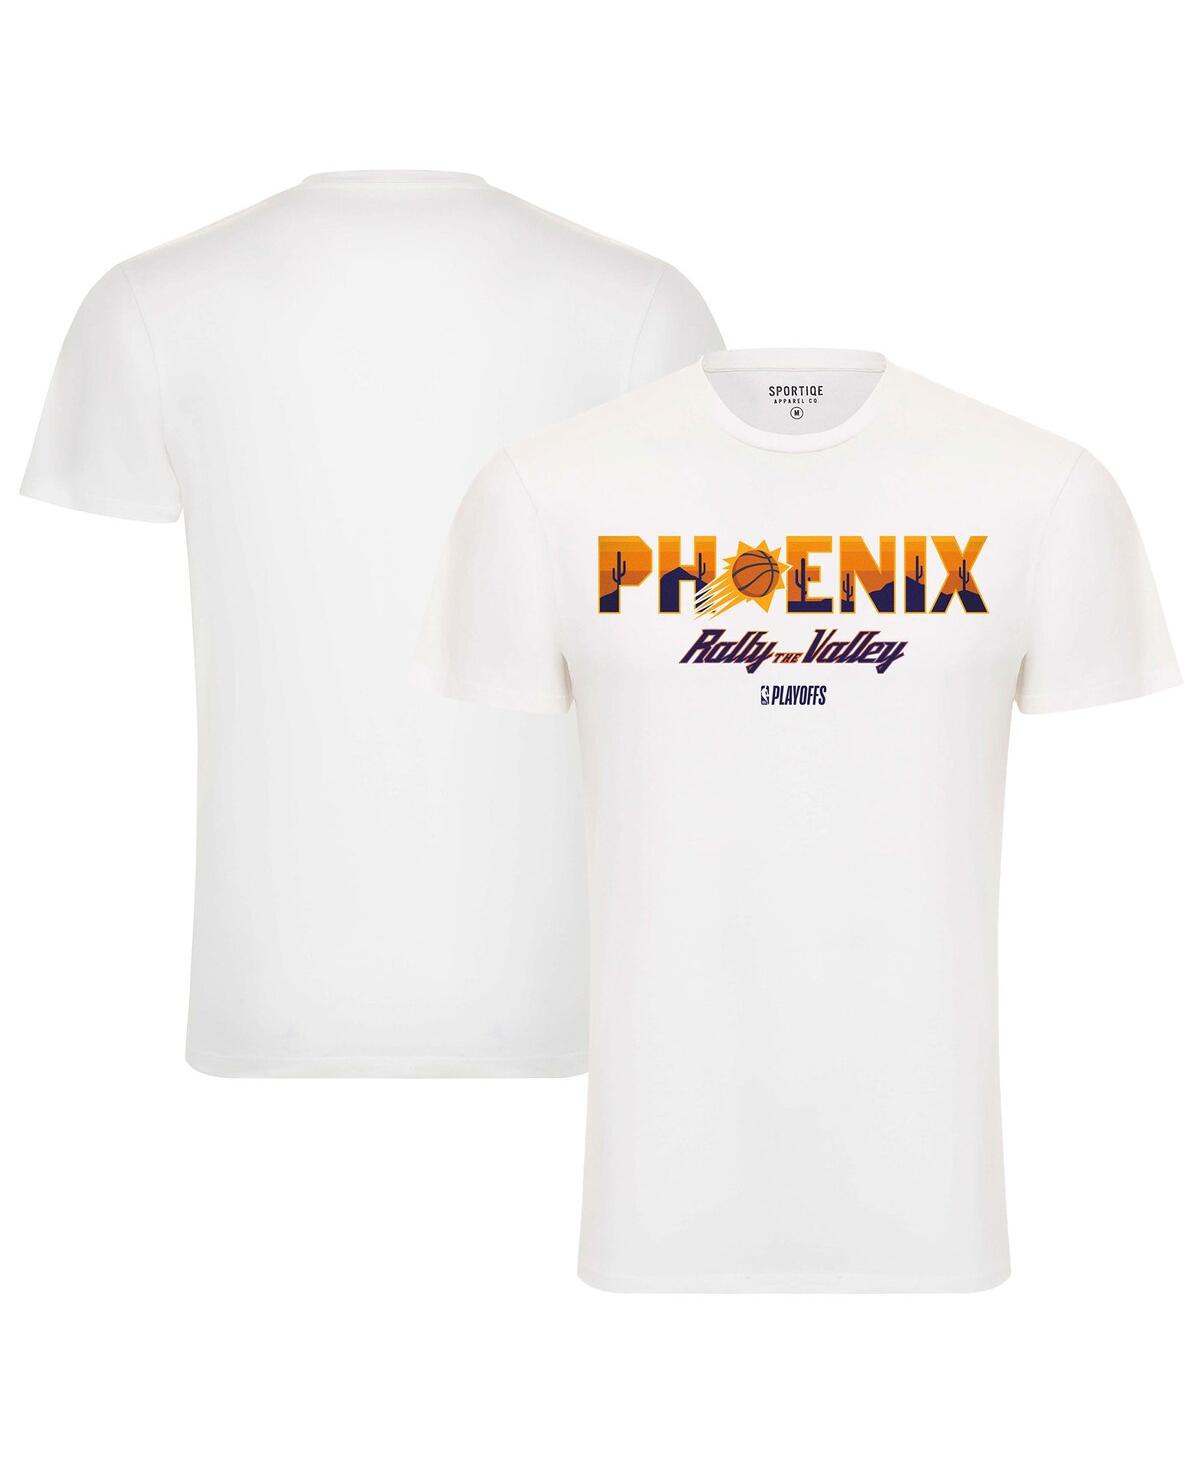 Men's and Women's Sportiqe White Phoenix Suns 2023 Nba Playoffs Rally the Valley Bingham T-shirt - White